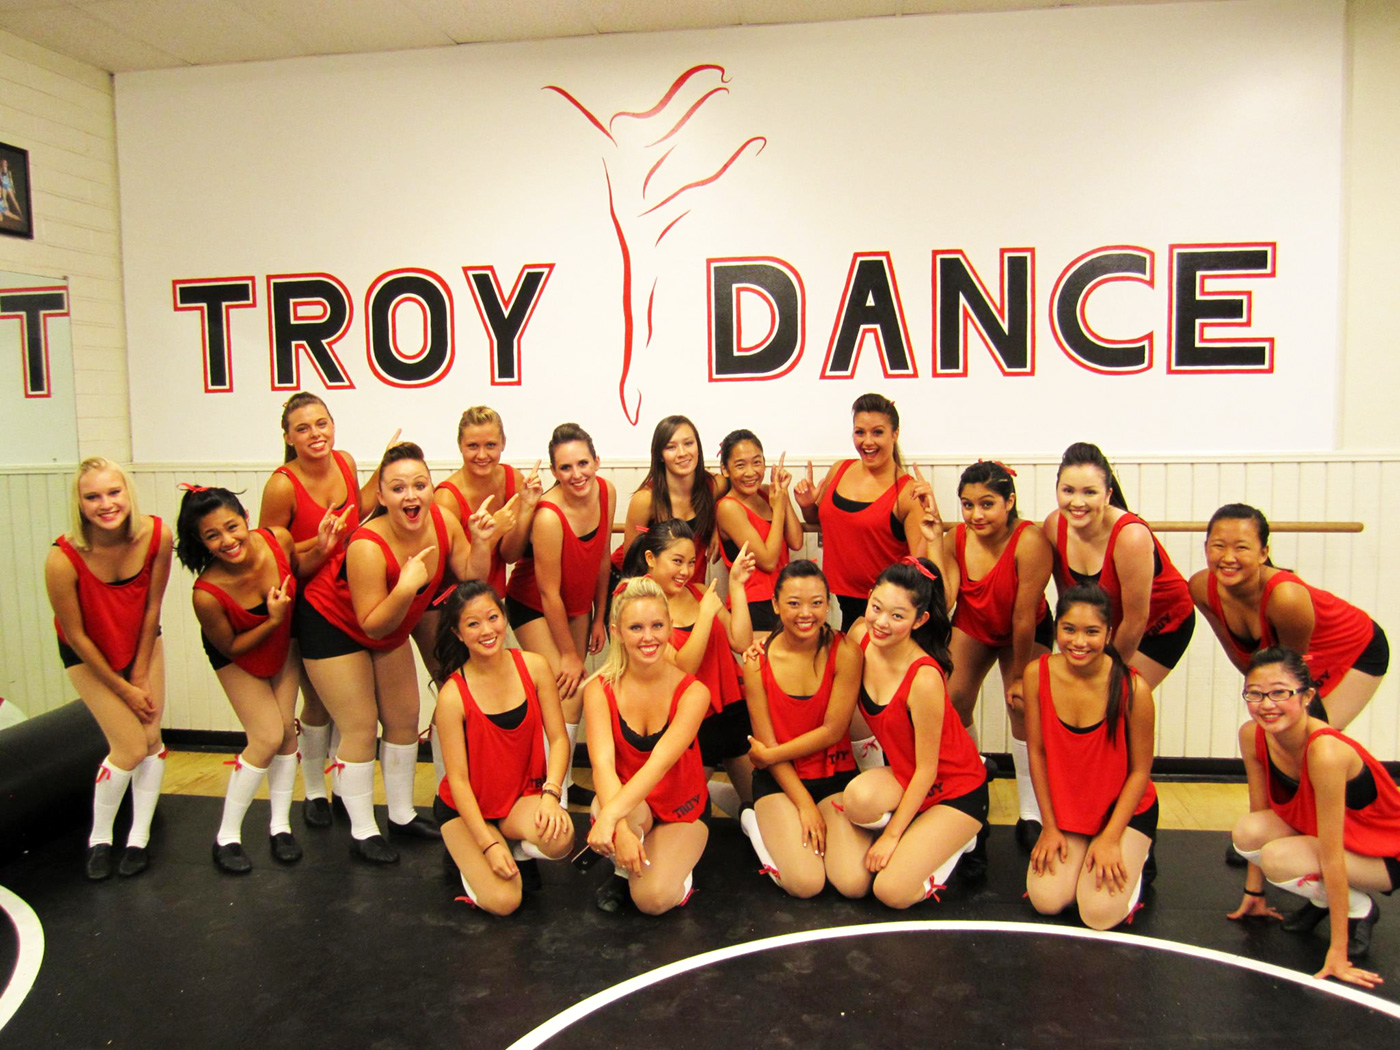 Image: Troy Dance Team